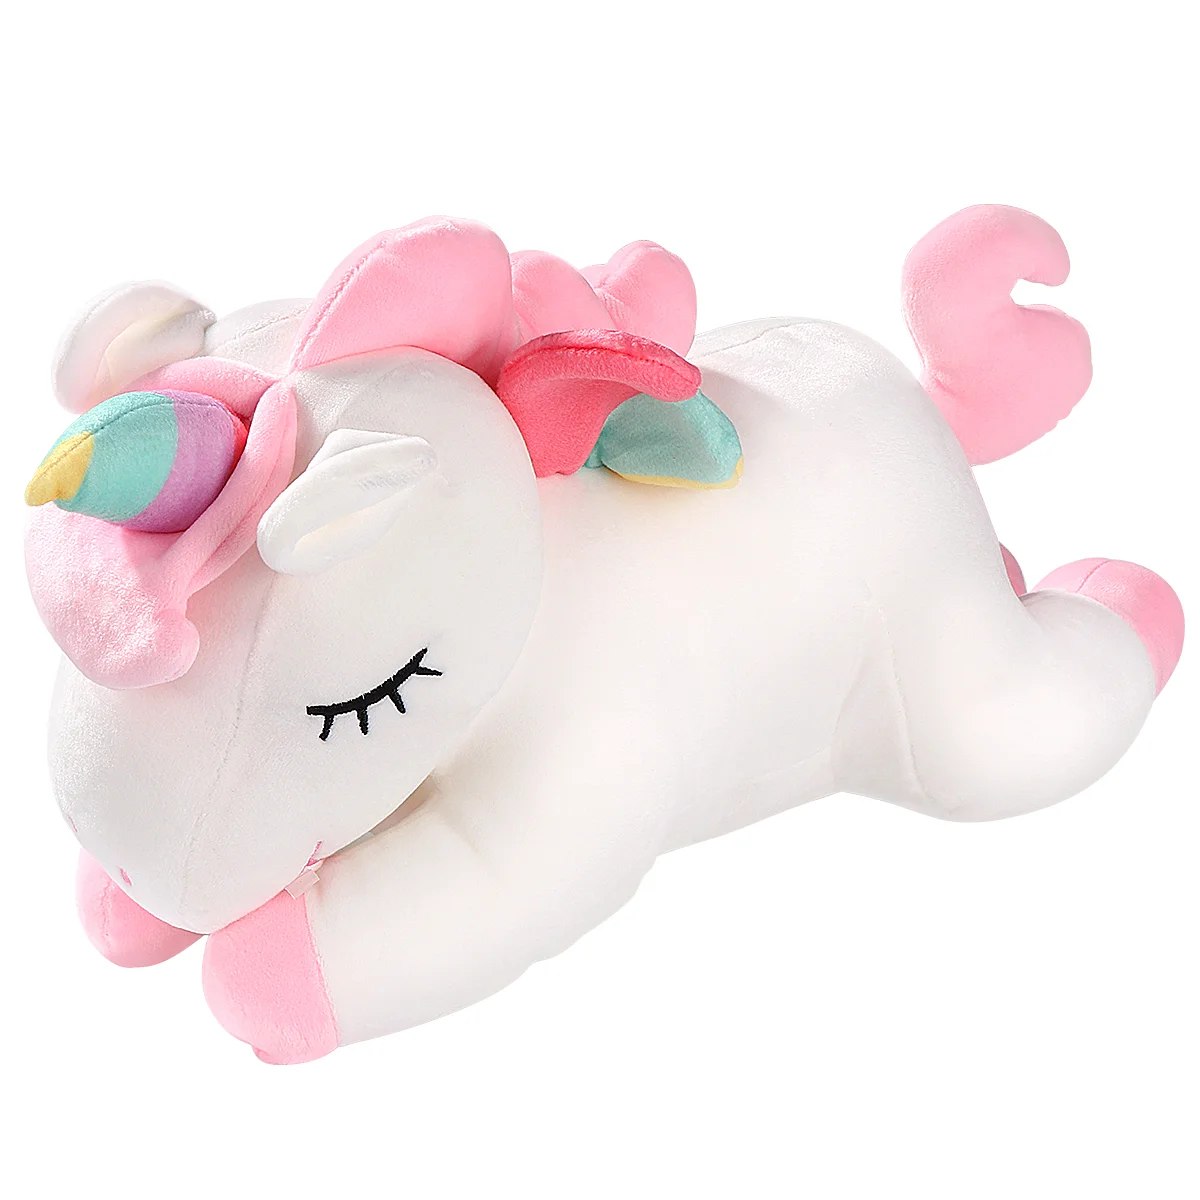 

TOYMYTOY Unicorn Stuffed Animal Plush Toy Pacified Plush Toy For Kids Children (40CM)